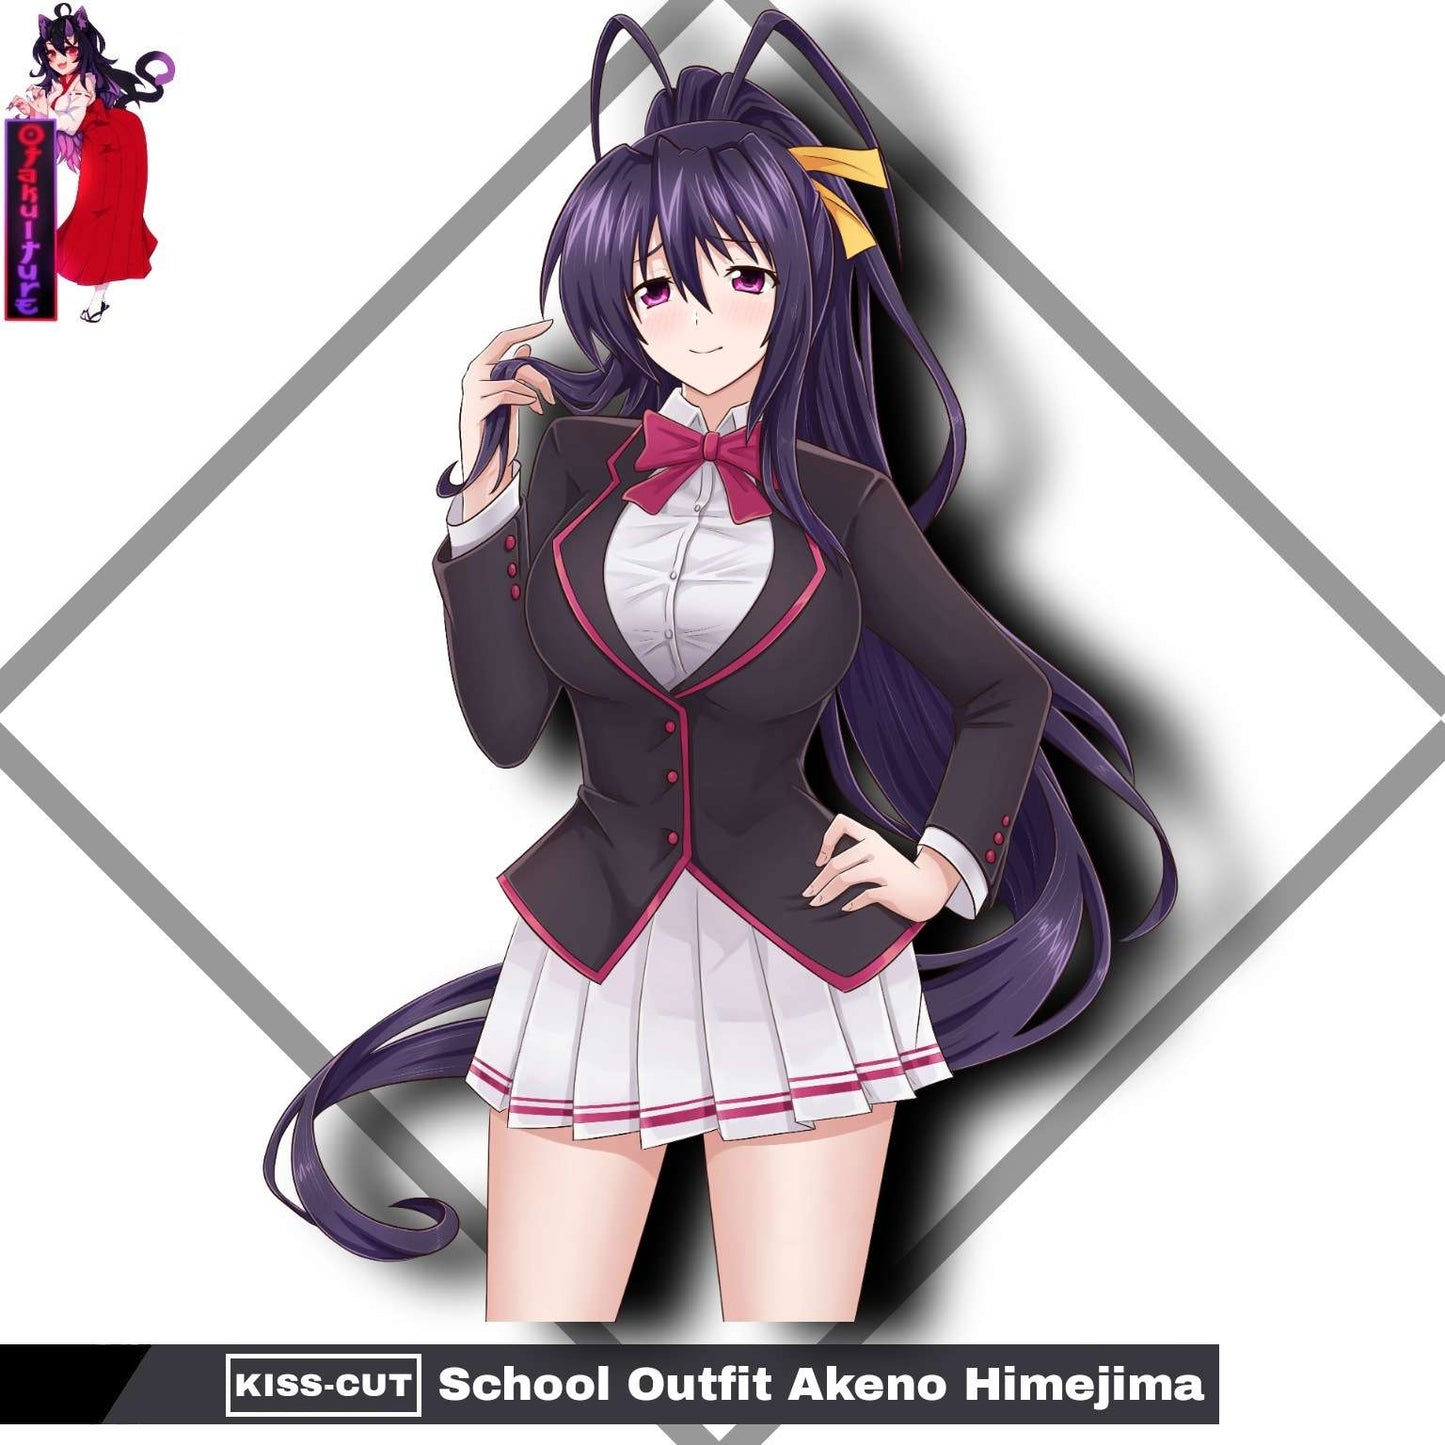 School Outfit Akeno Himejima